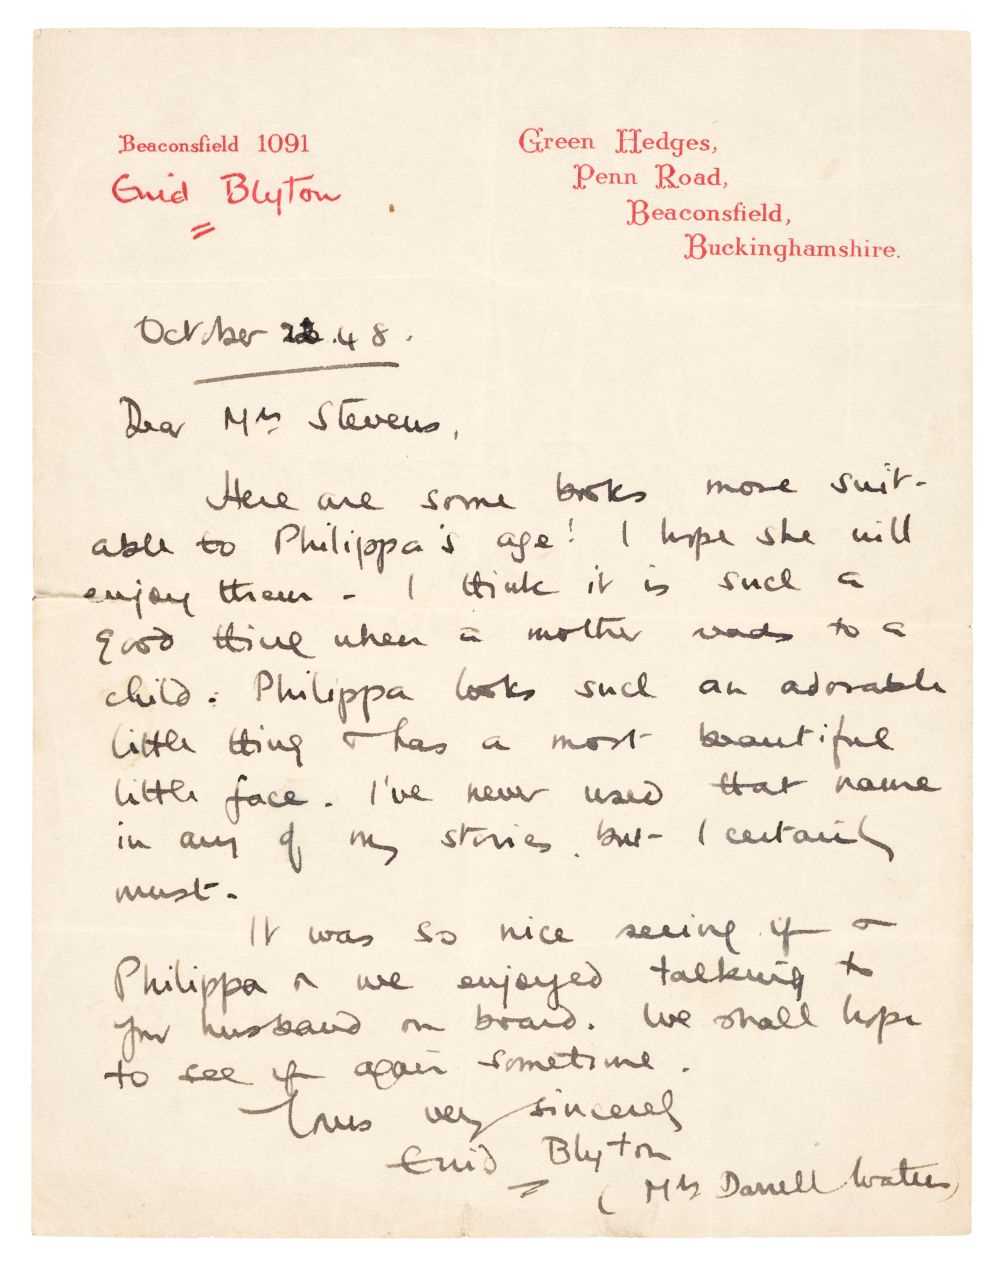 Lot 472 - Blyton (Enid, 1897-1968). Autograph letter signed 'Enid Blyton (Mrs Darrell Waters)',  1948